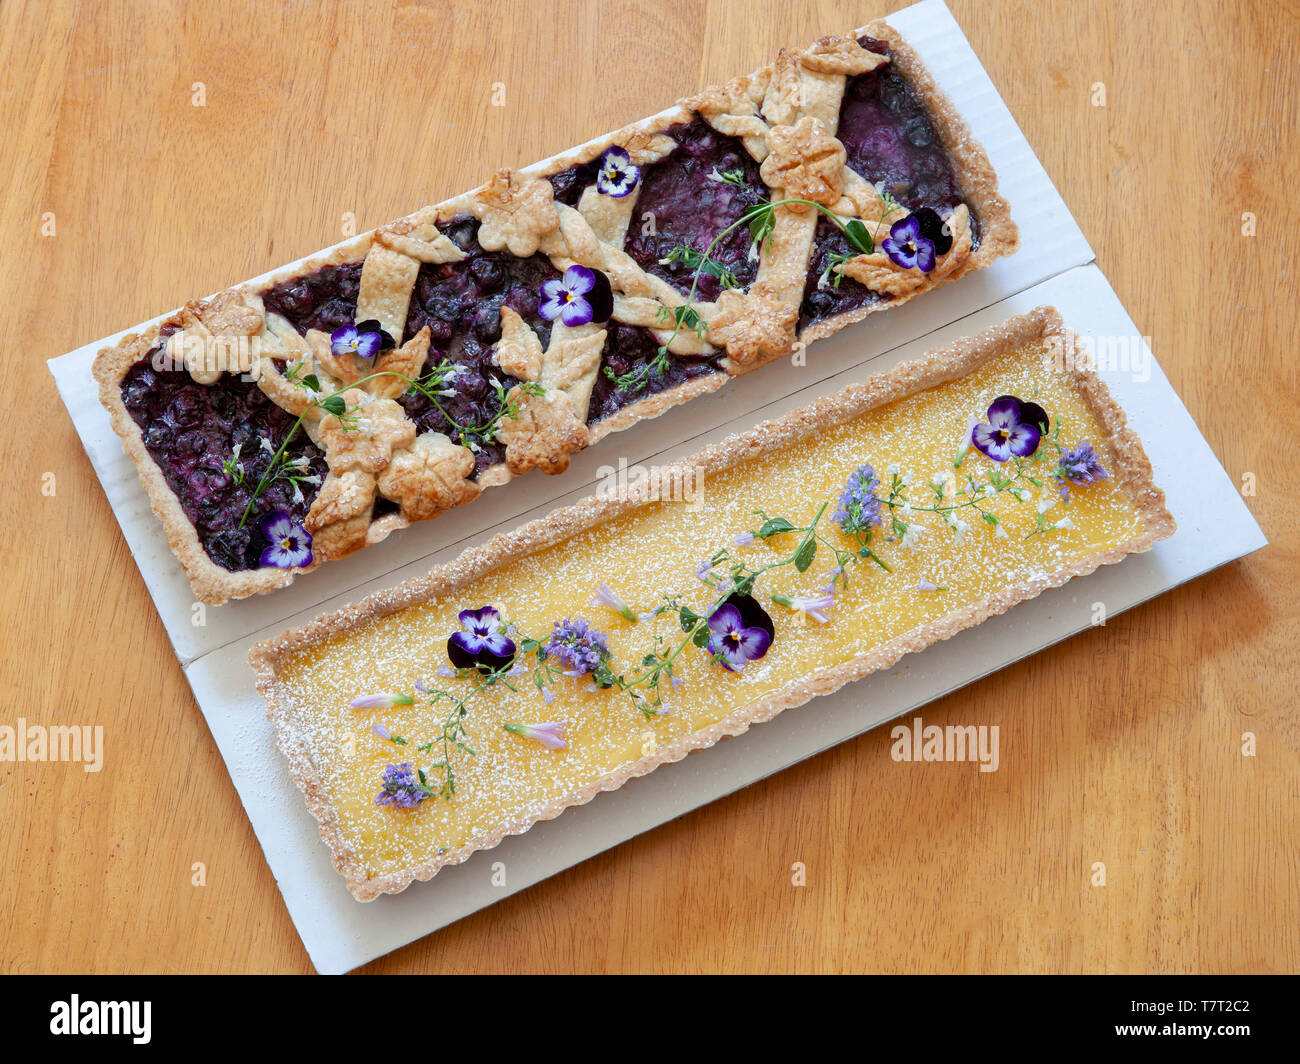 Blueberry Tart and Lemon Tart with Edible Flowers Stock Photo